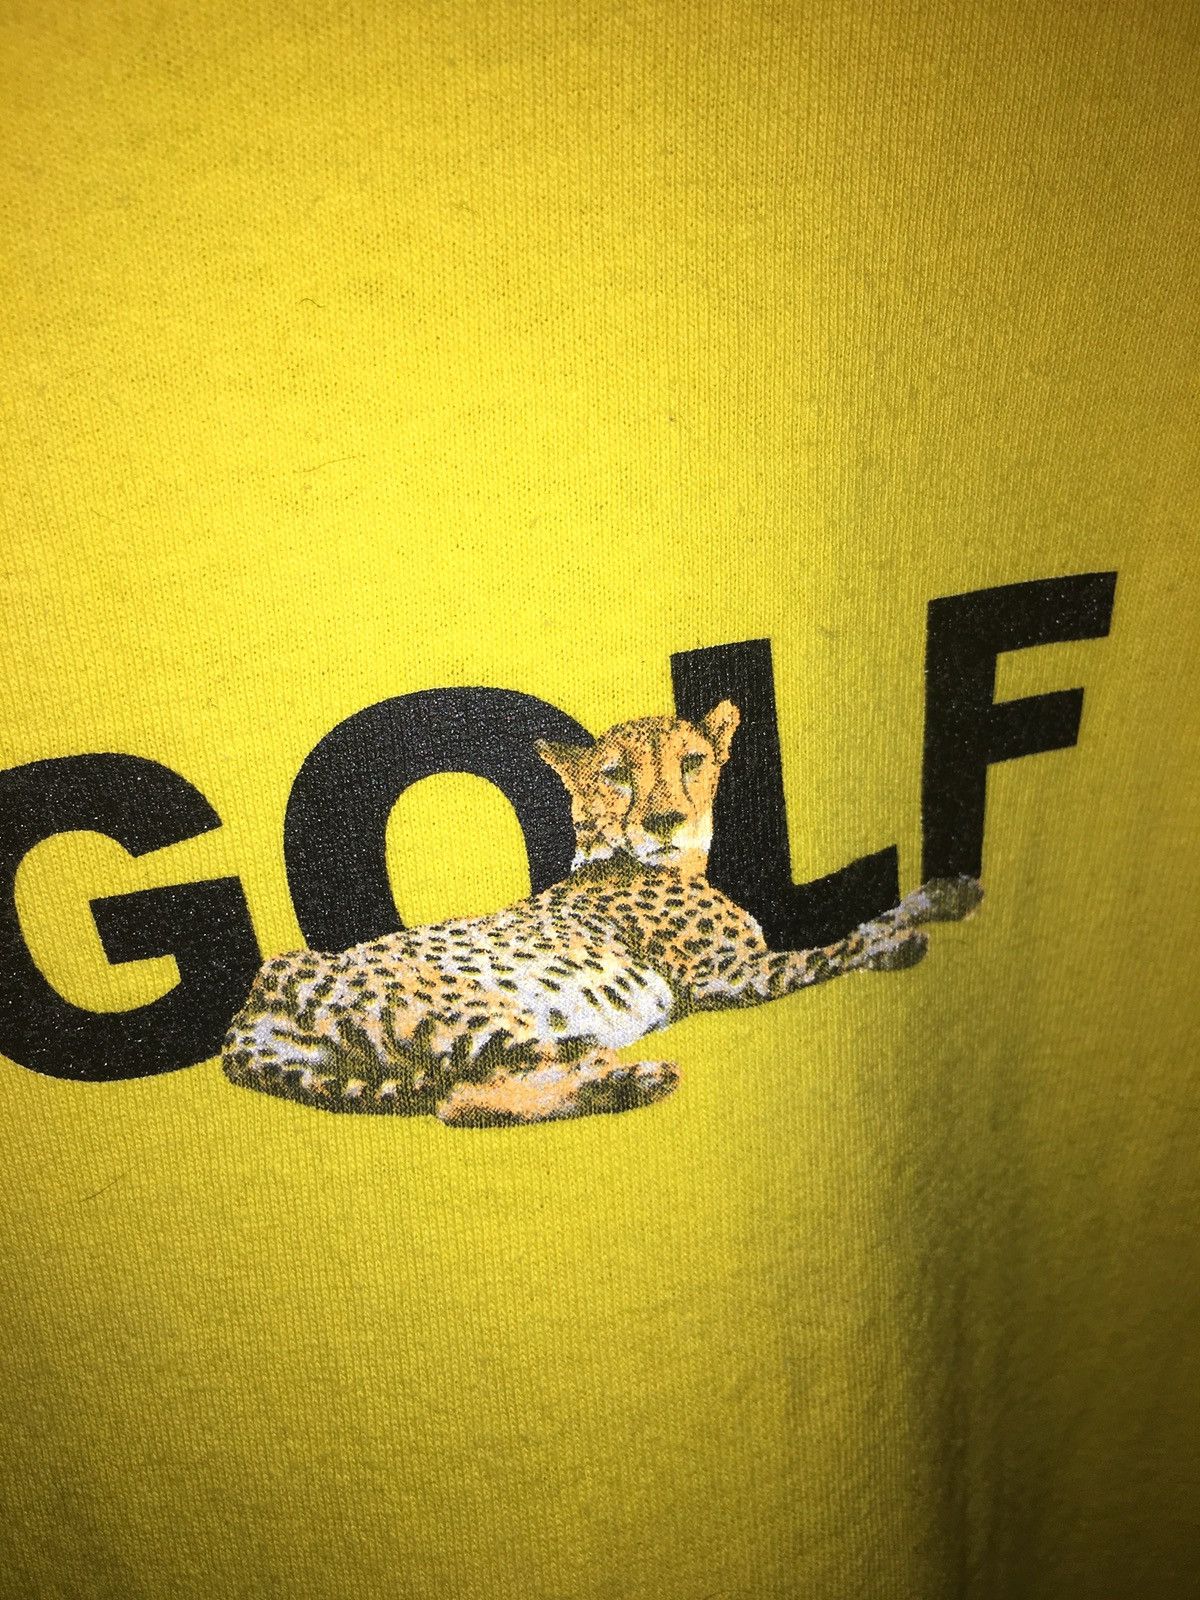 Golf Wang Golf Wang Cheetah Shirt Size US L / EU 52-54 / 3 - 2 Preview